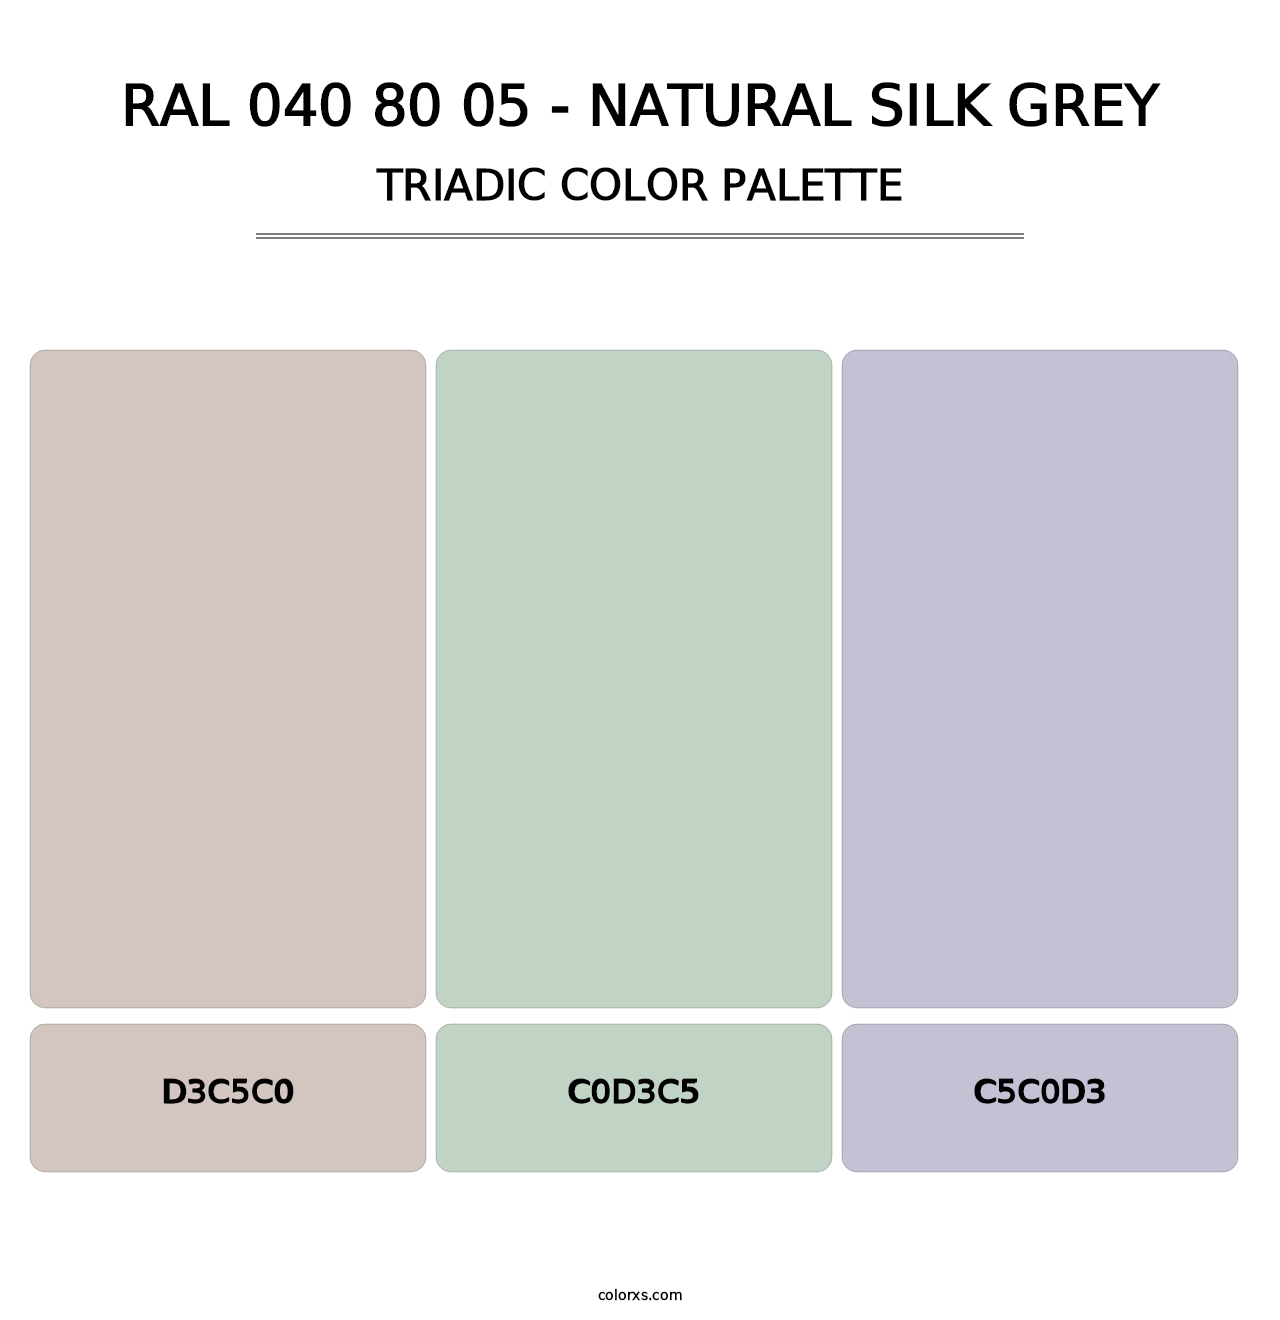 RAL 040 80 05 - Natural Silk Grey - Triadic Color Palette